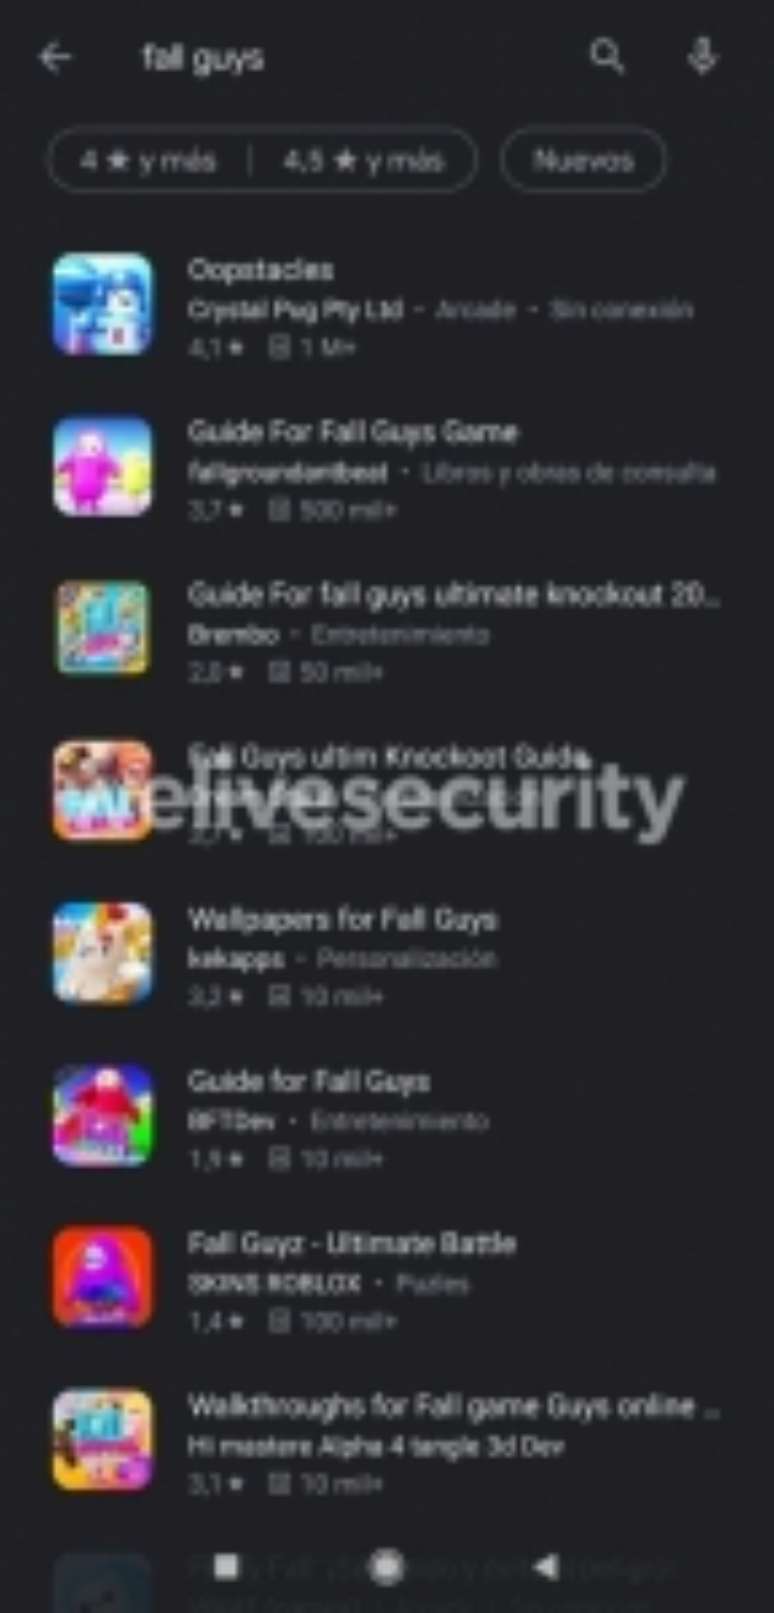 Resultados do Google Play para a busca "Fall Guys"